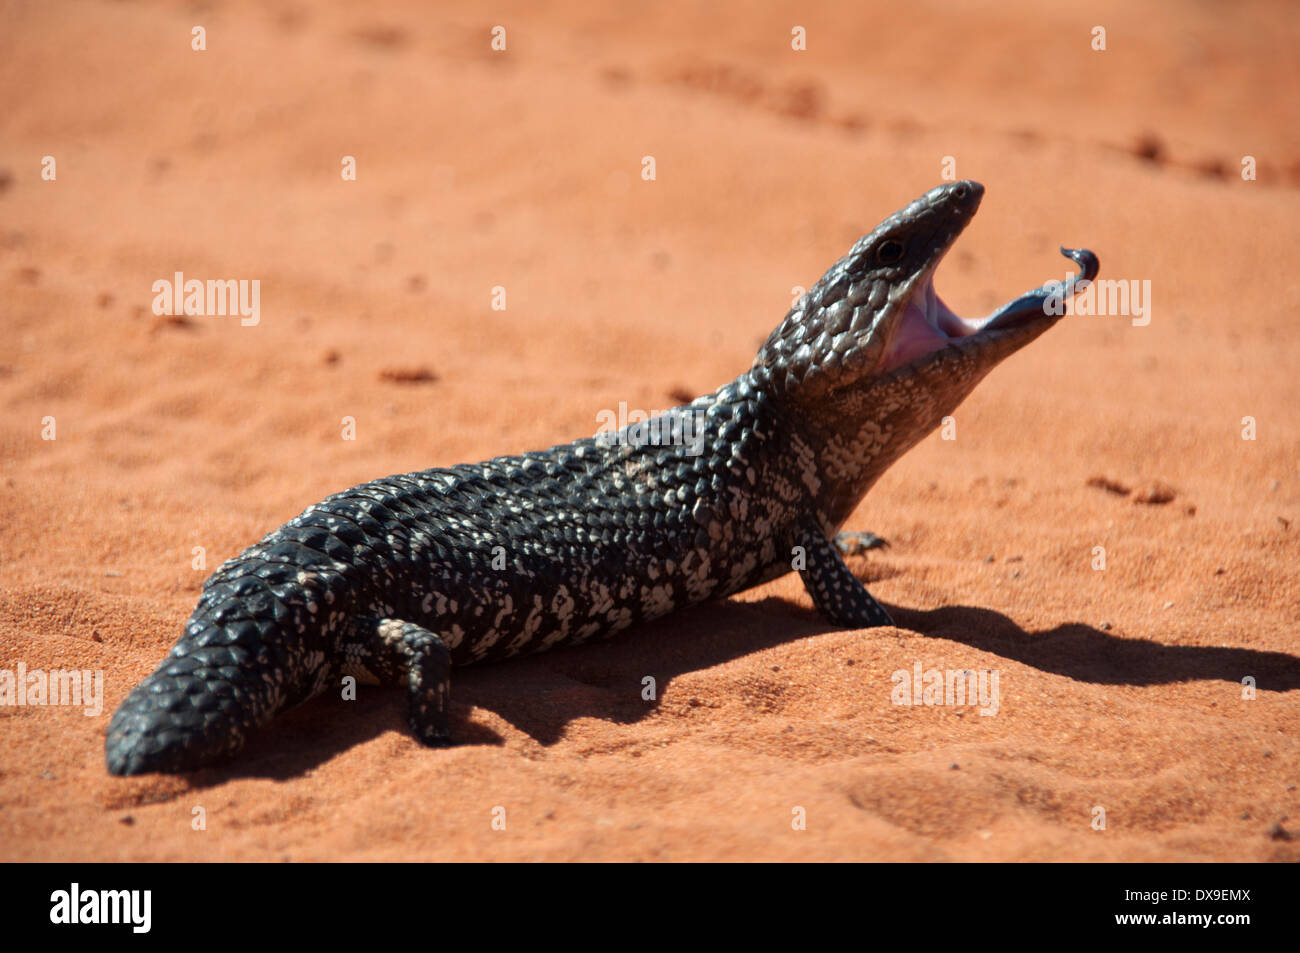 Blue tongue lizard in the desert Stock Photo